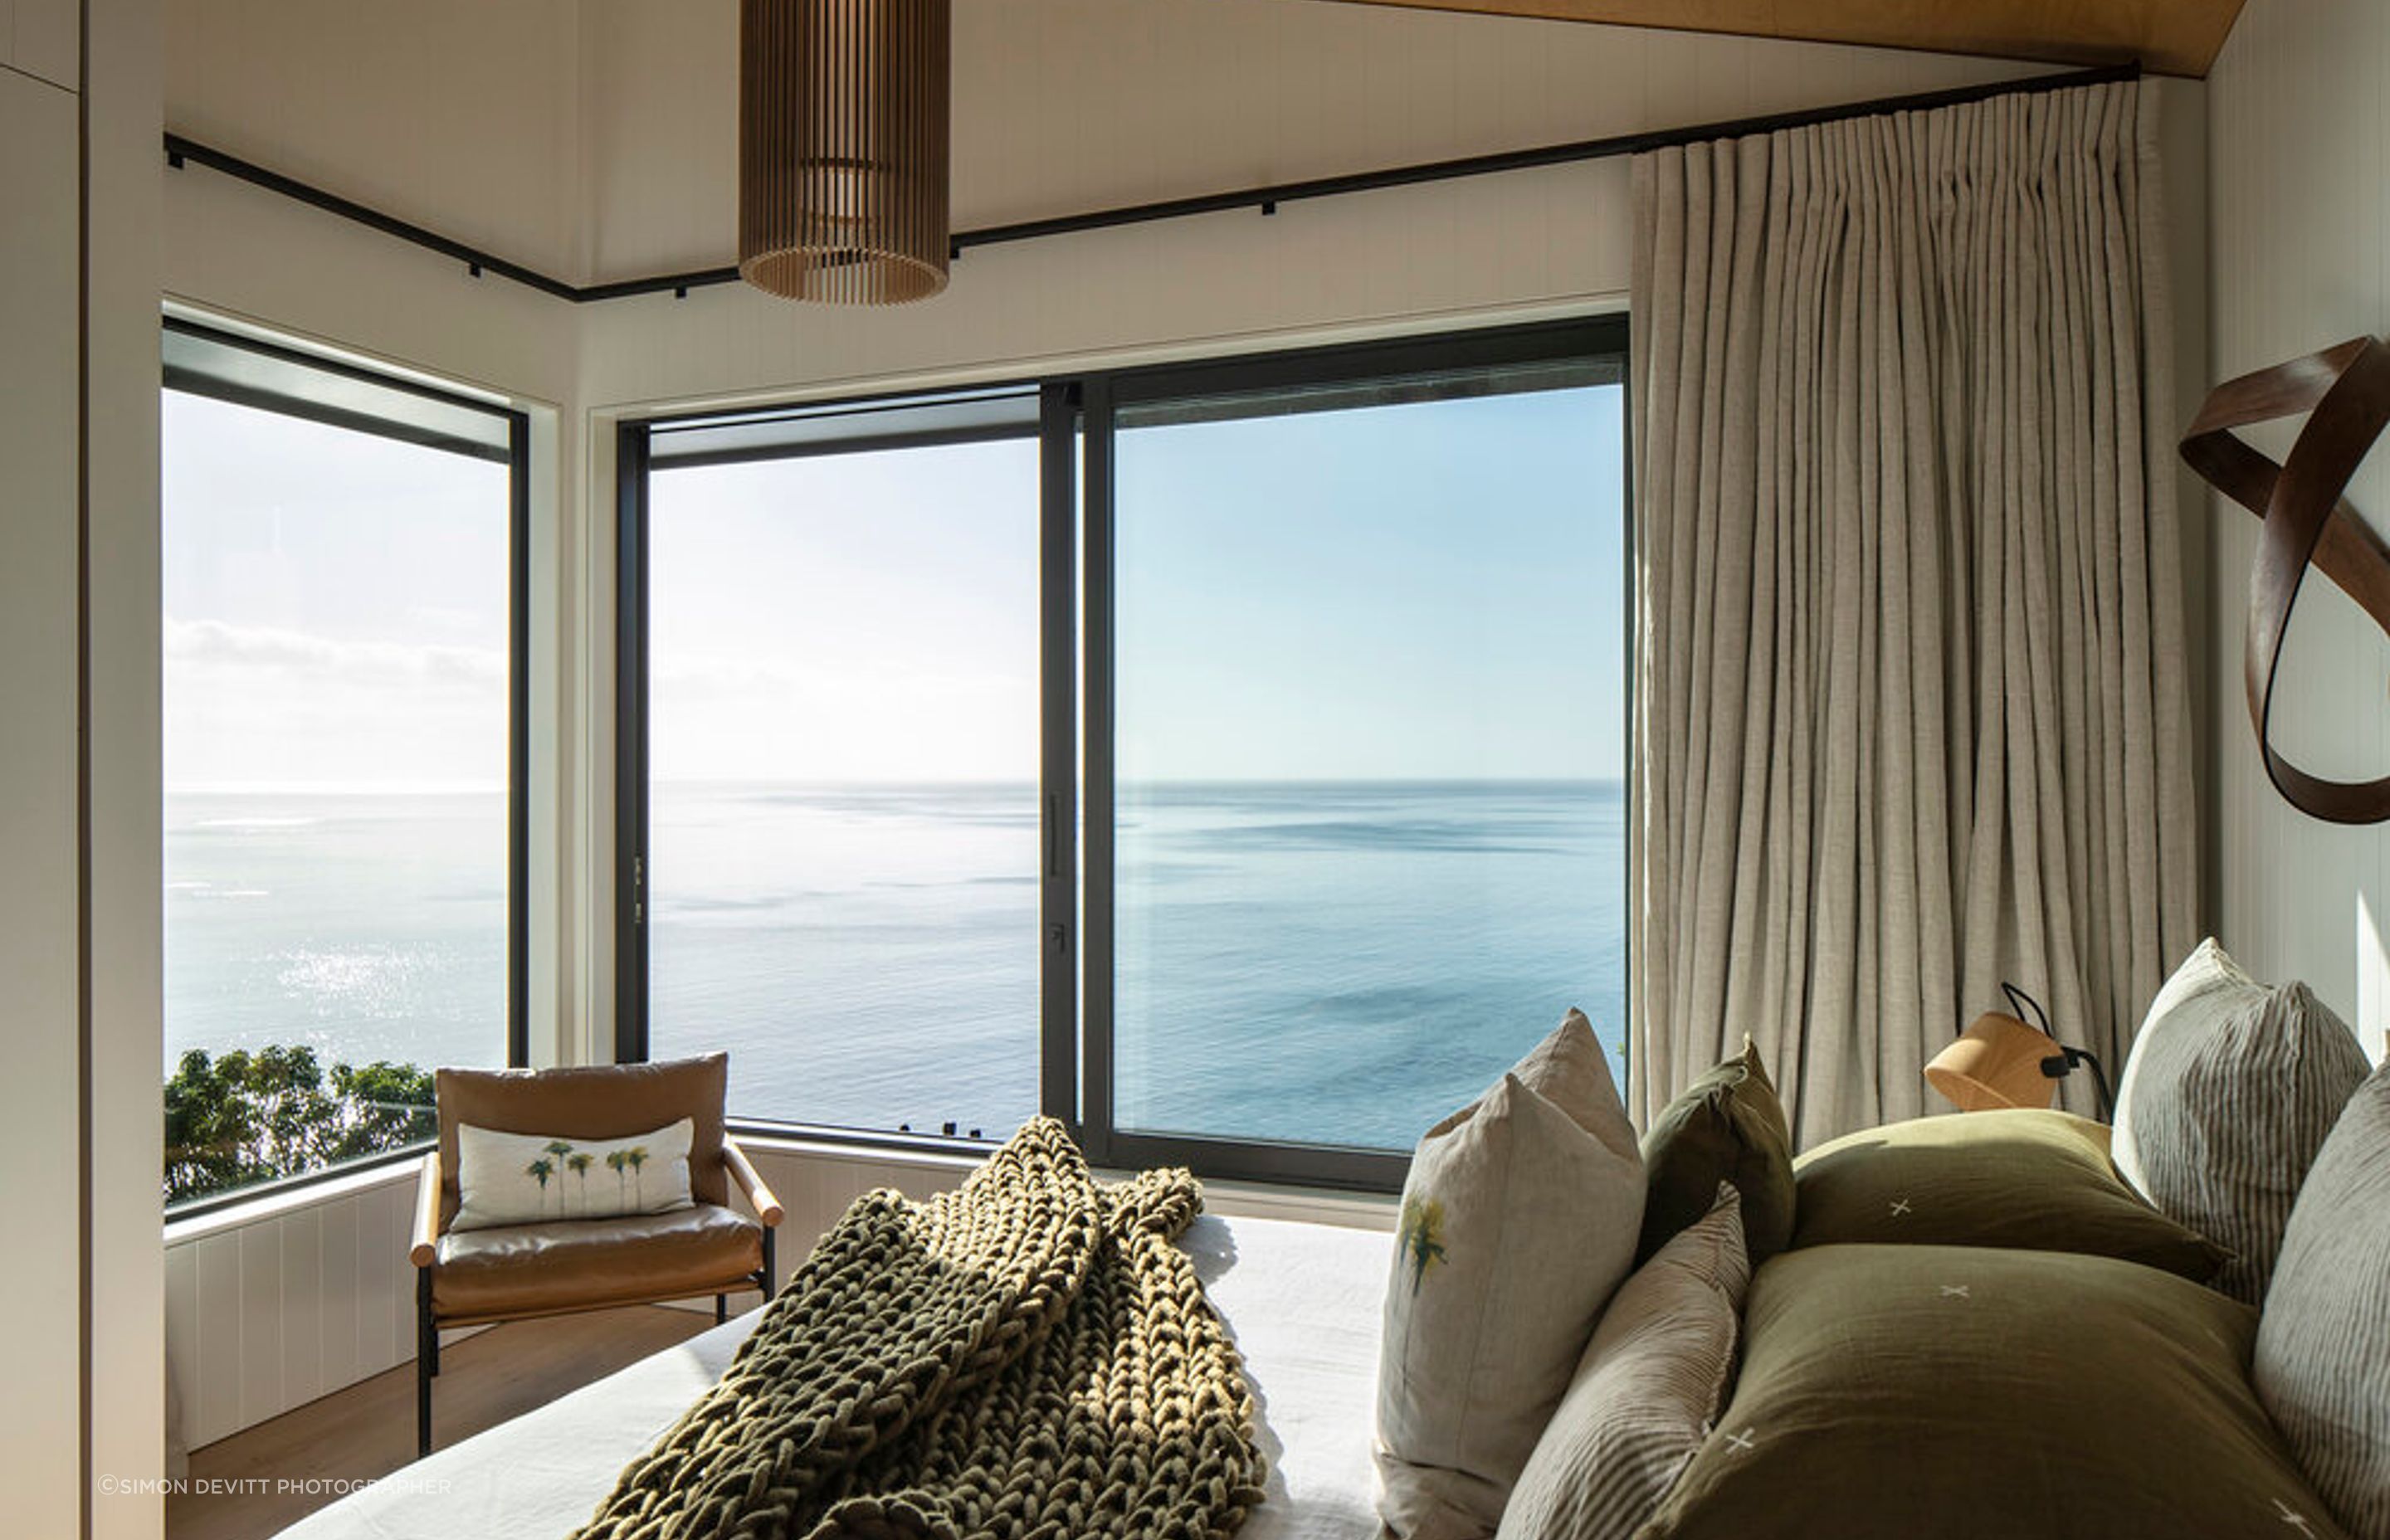 The main bedroom enjoys enviable views over Omaha Bay.